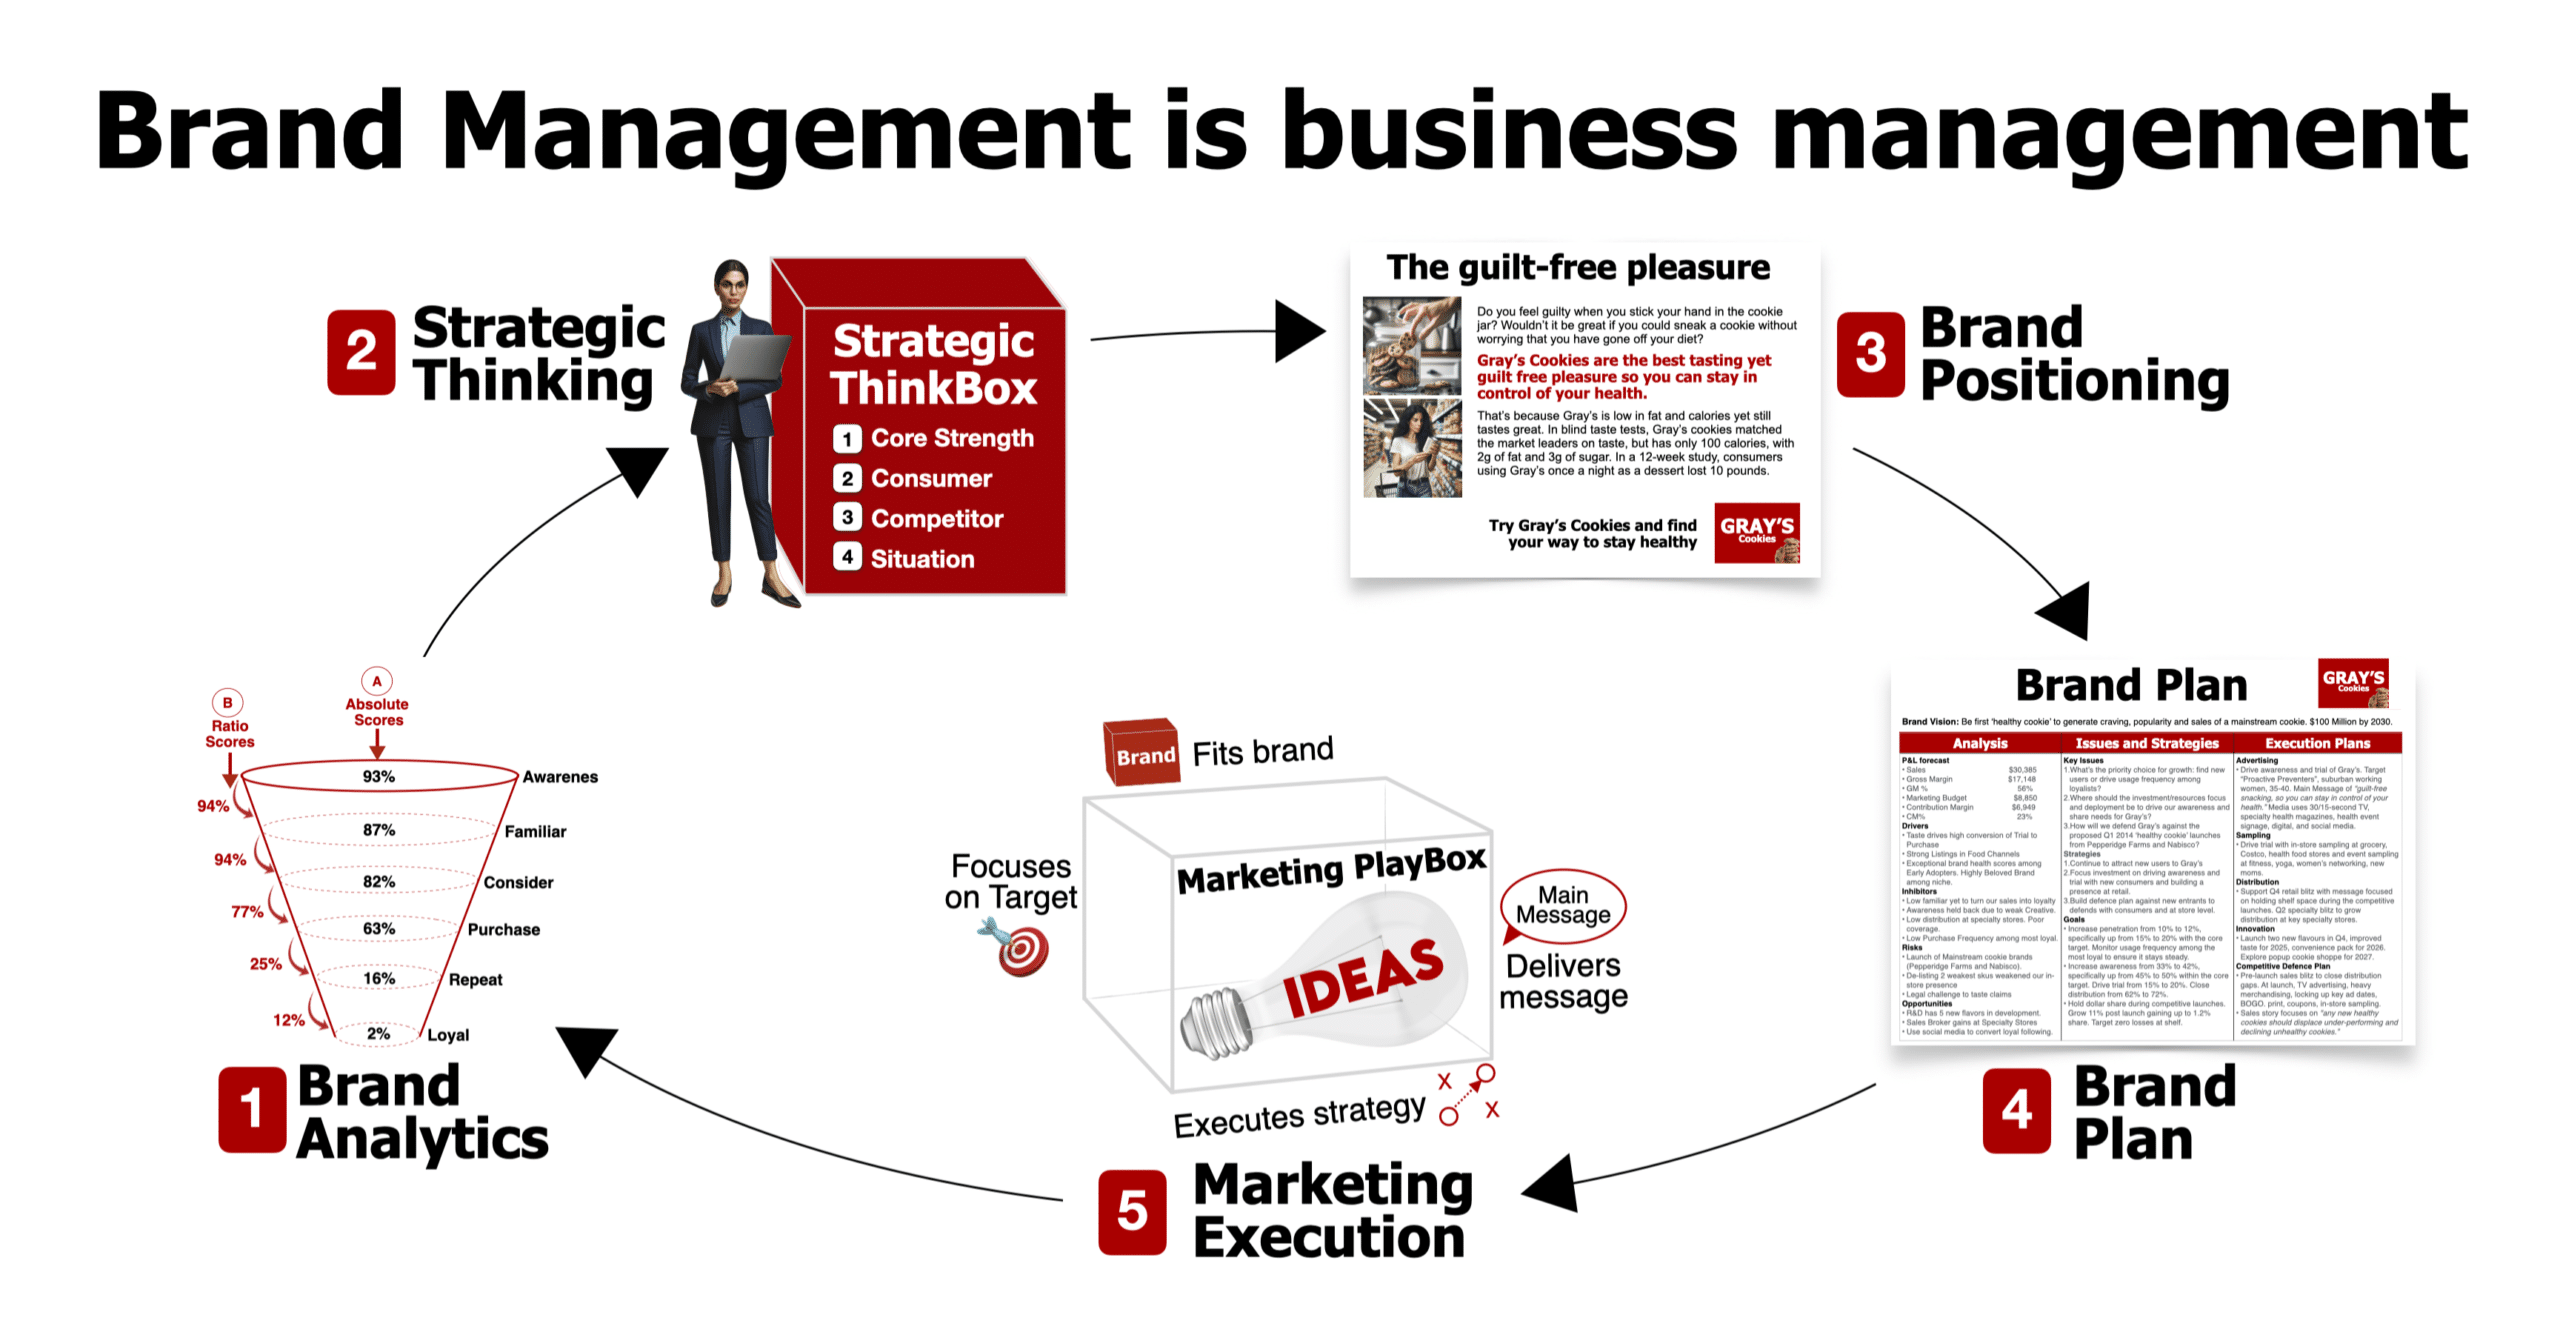 Brand Management is business management